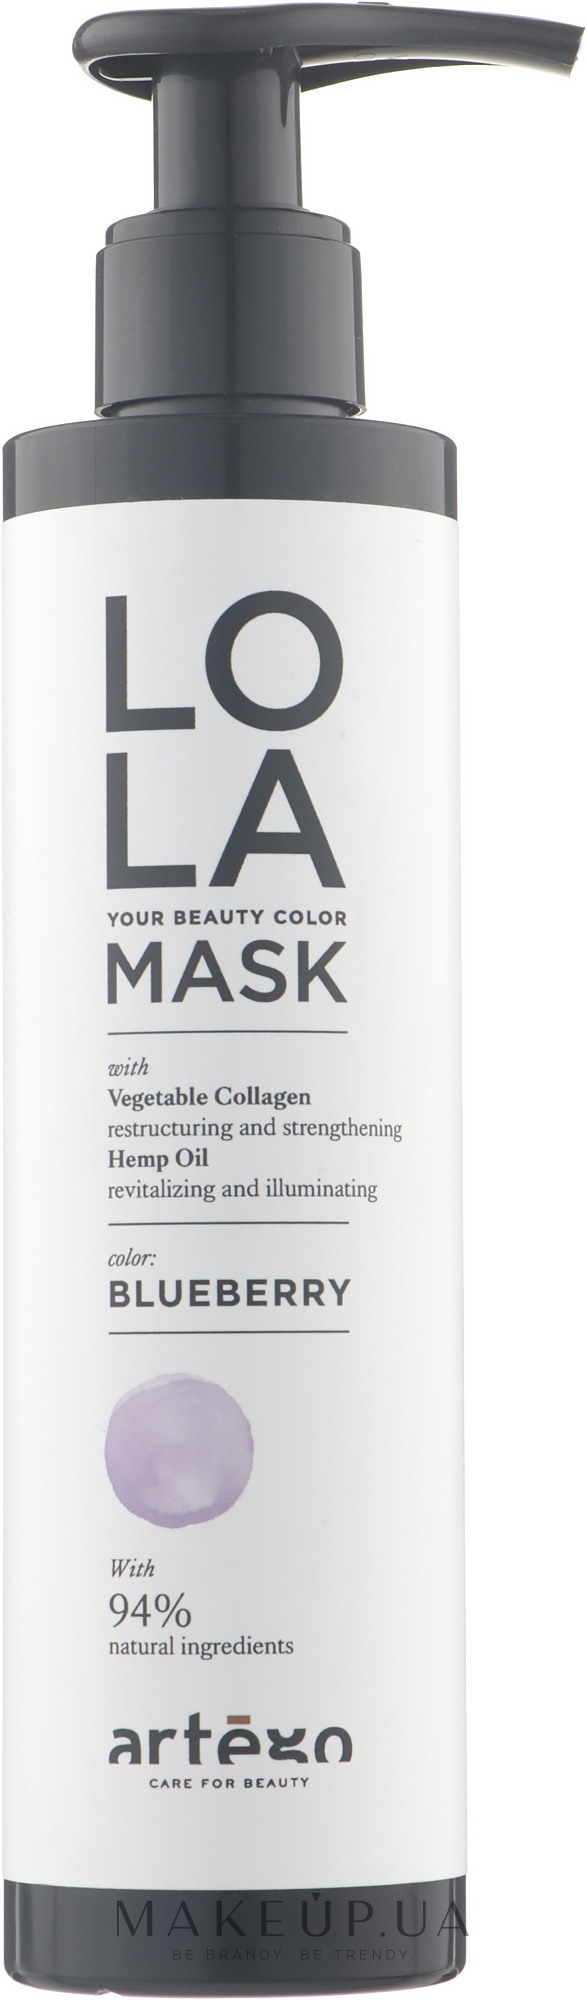 Відтінкова маска - Artego LOLA Your Beauty Color Mask — фото Blueberry